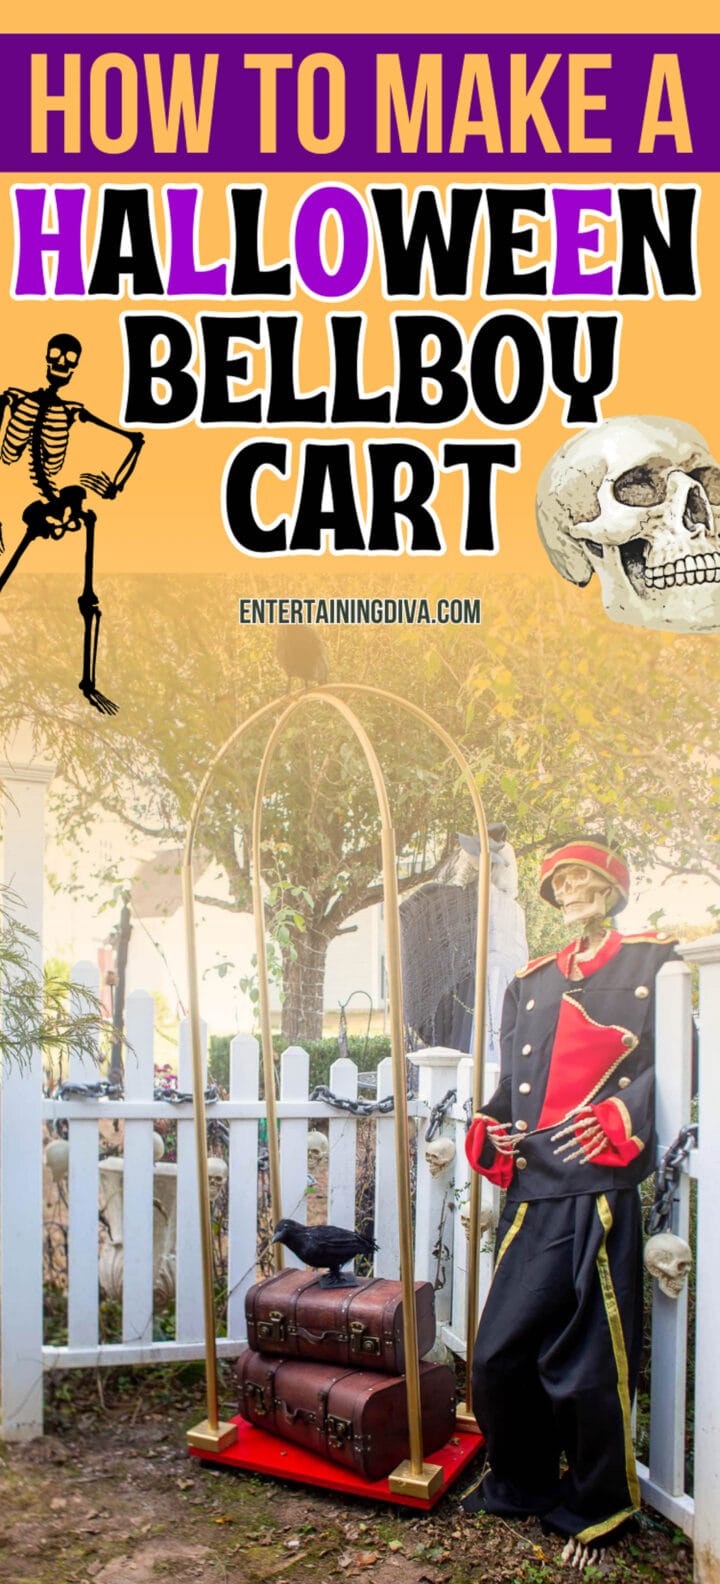 How To Make A DIY Halloween Bellboy Cart